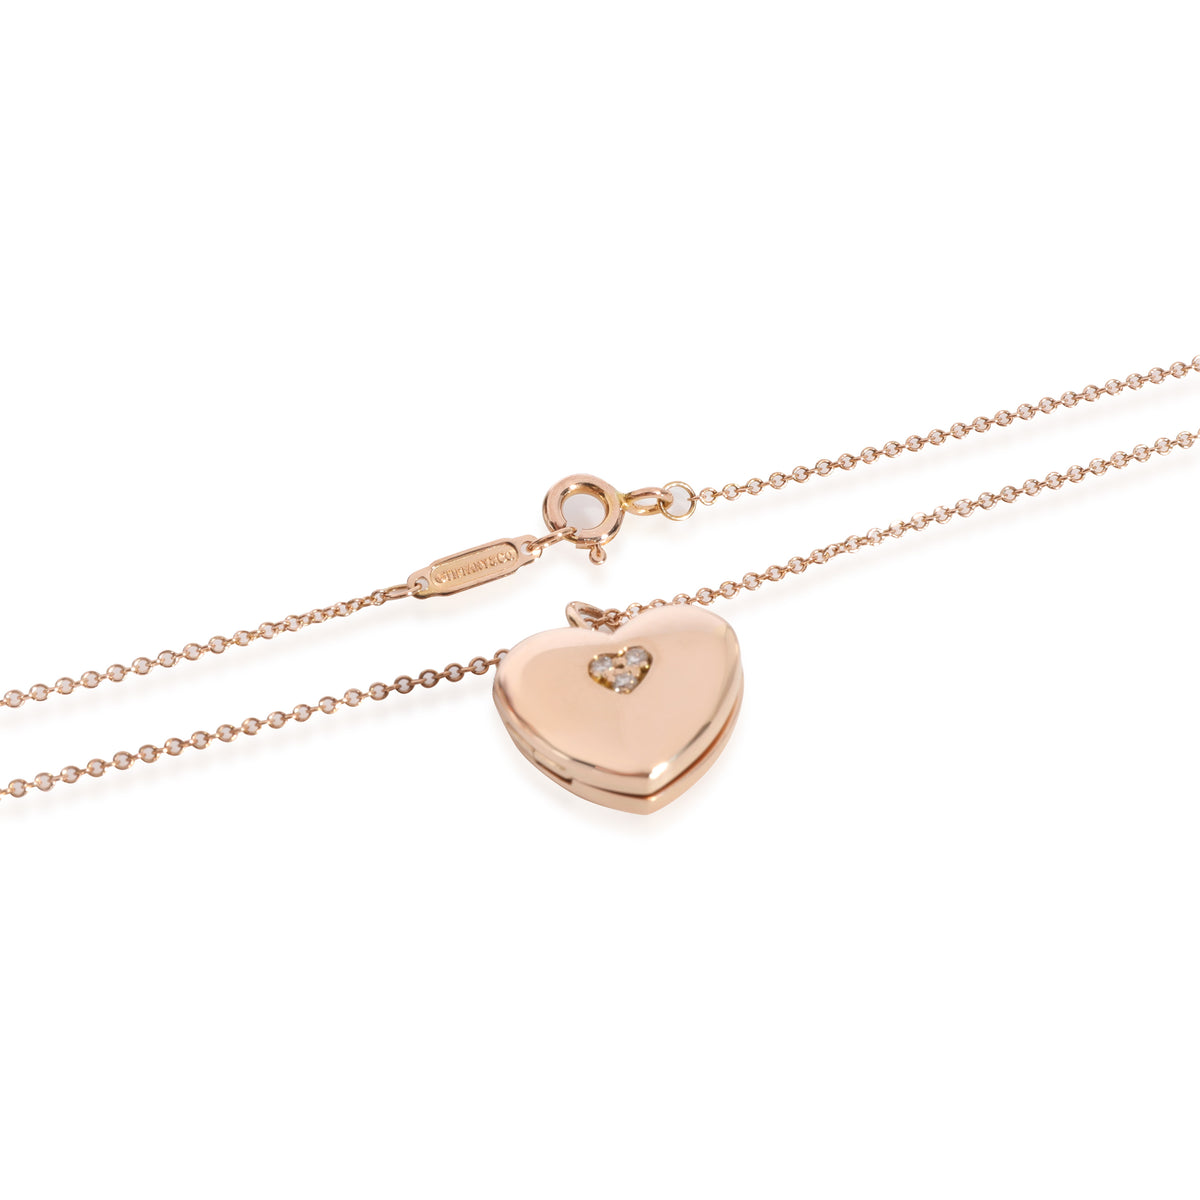 Tiffany & Co. 18K Rose Gold and Diamond Heart Lock Pendant Necklace